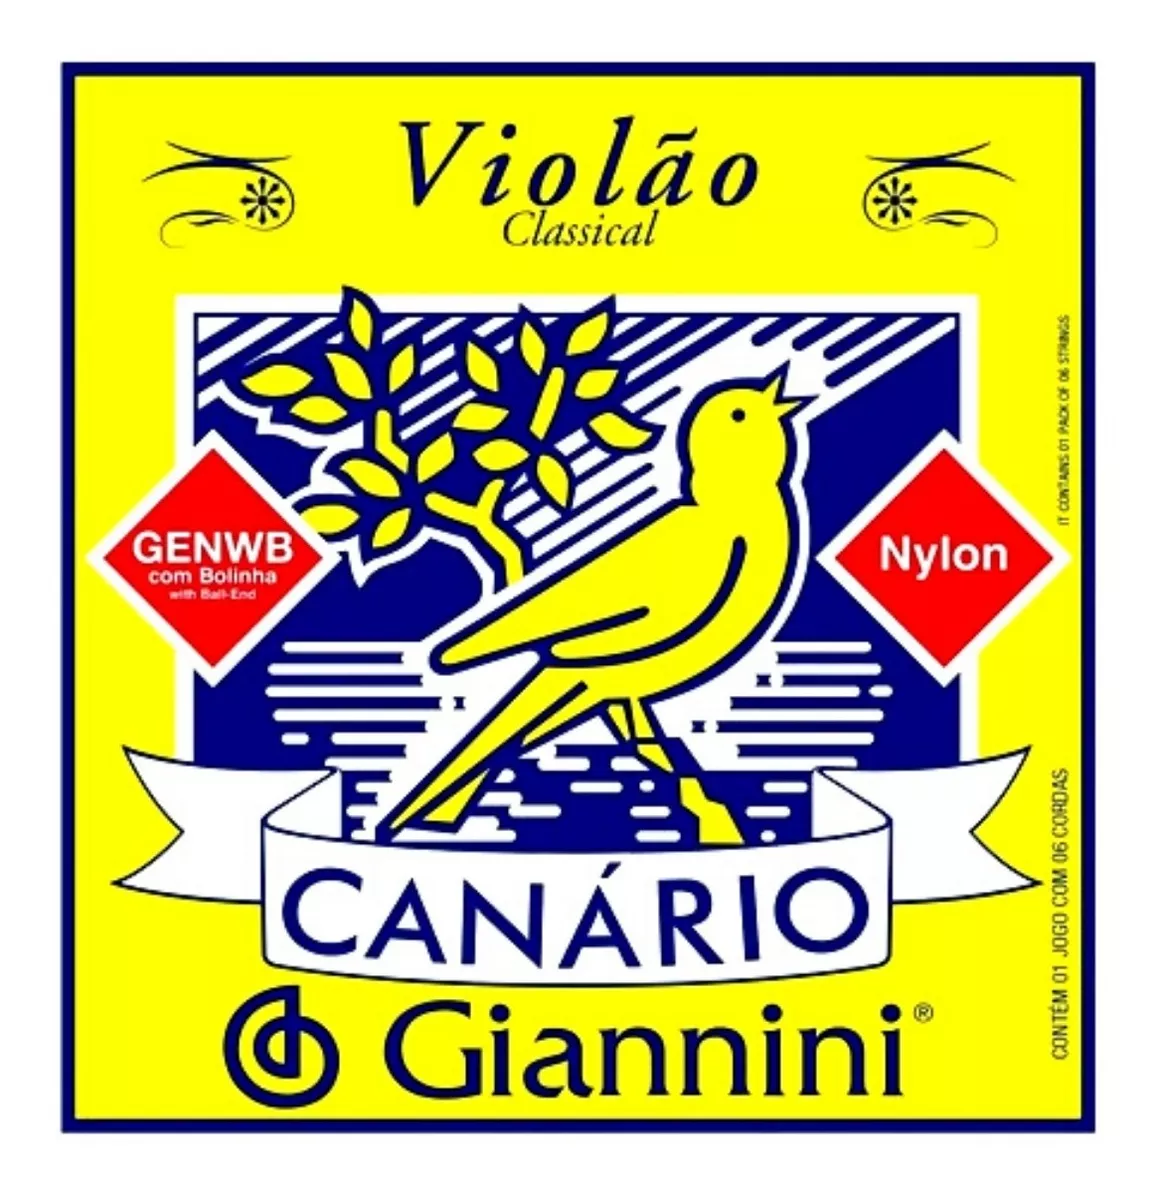 Encordoamento Violão Nylon Jogo C/6 Giannini Canario Novo